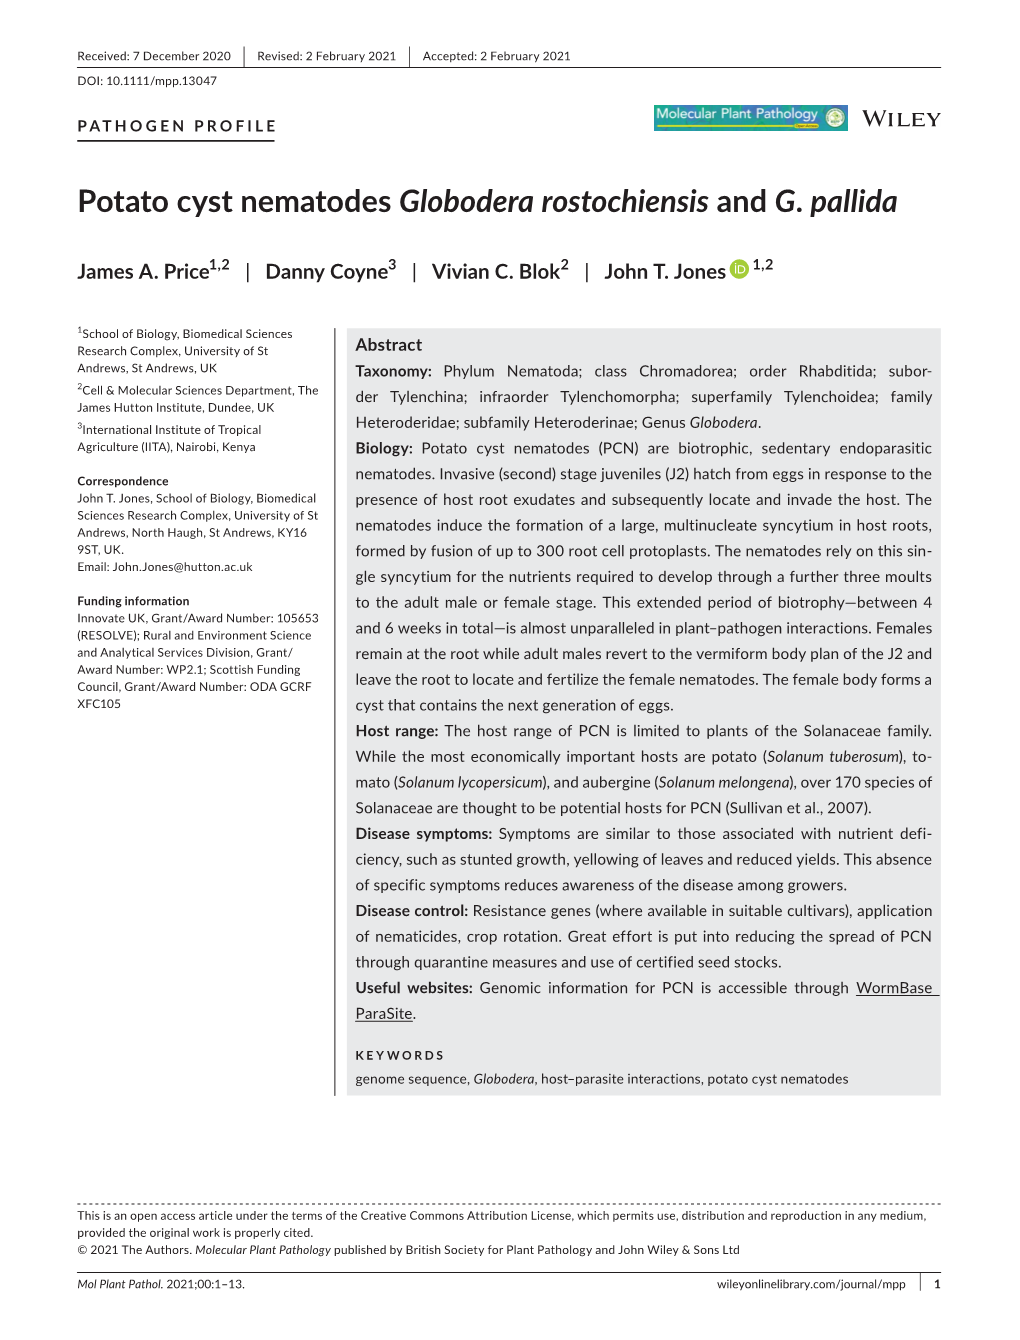 Potato Cyst Nematodes Globodera Rostochiensis and G. Pallida